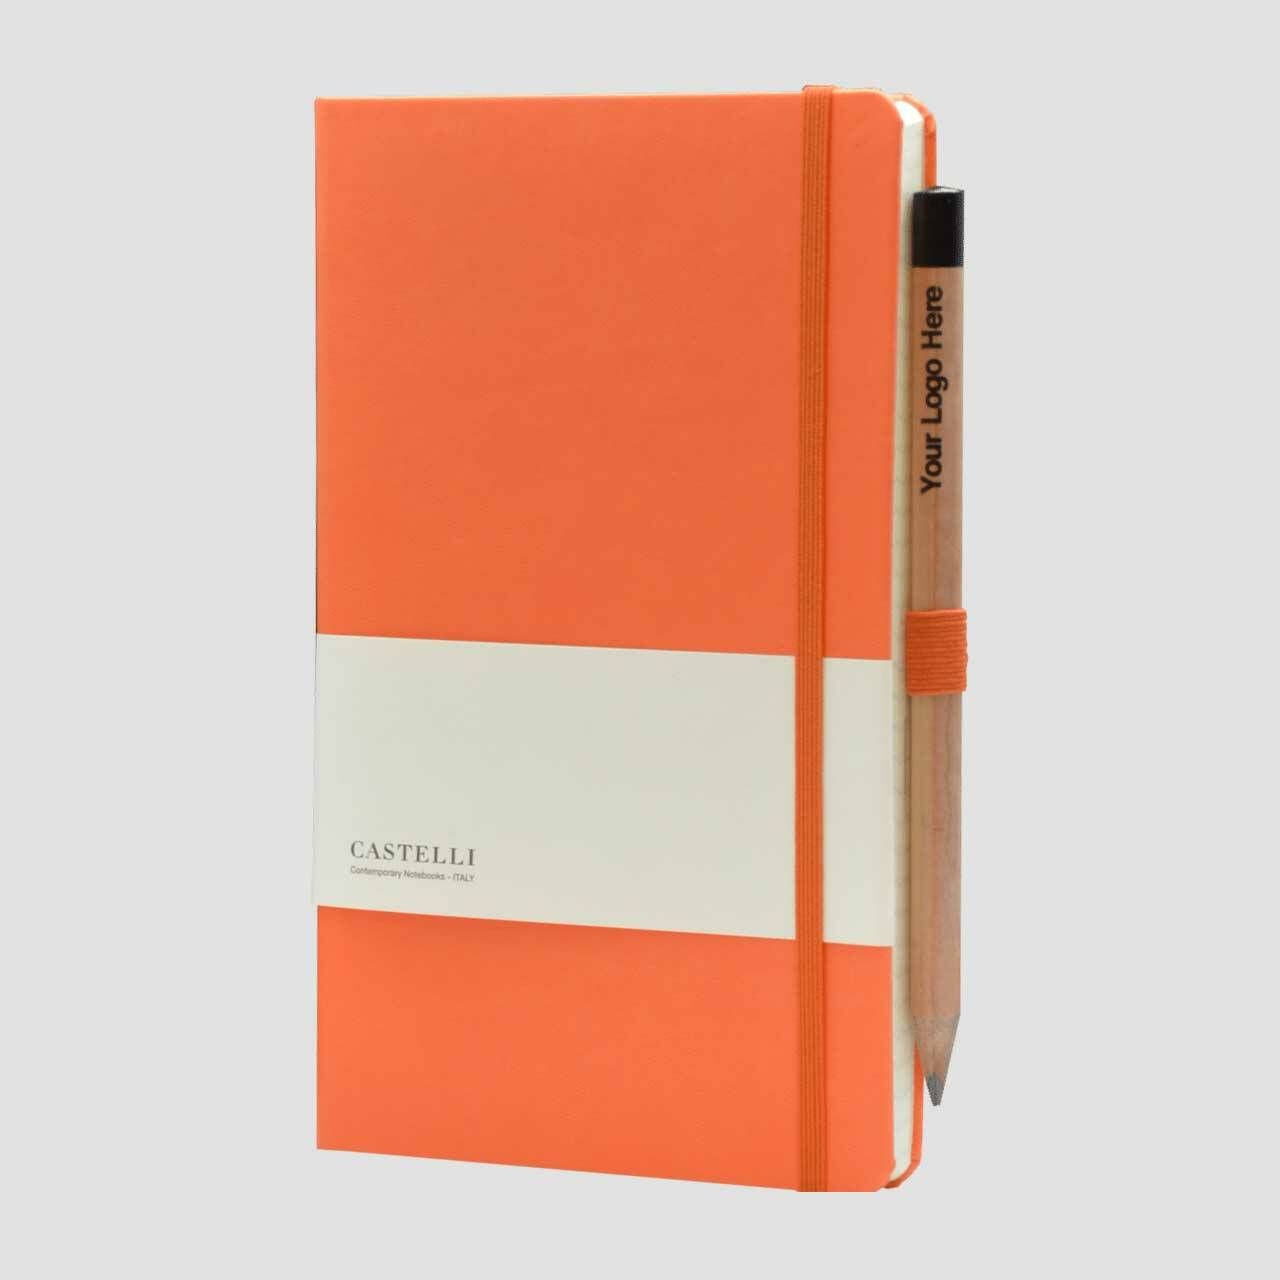 Castelli notitieboek soft touch met banderol en potlood met houder, oranje